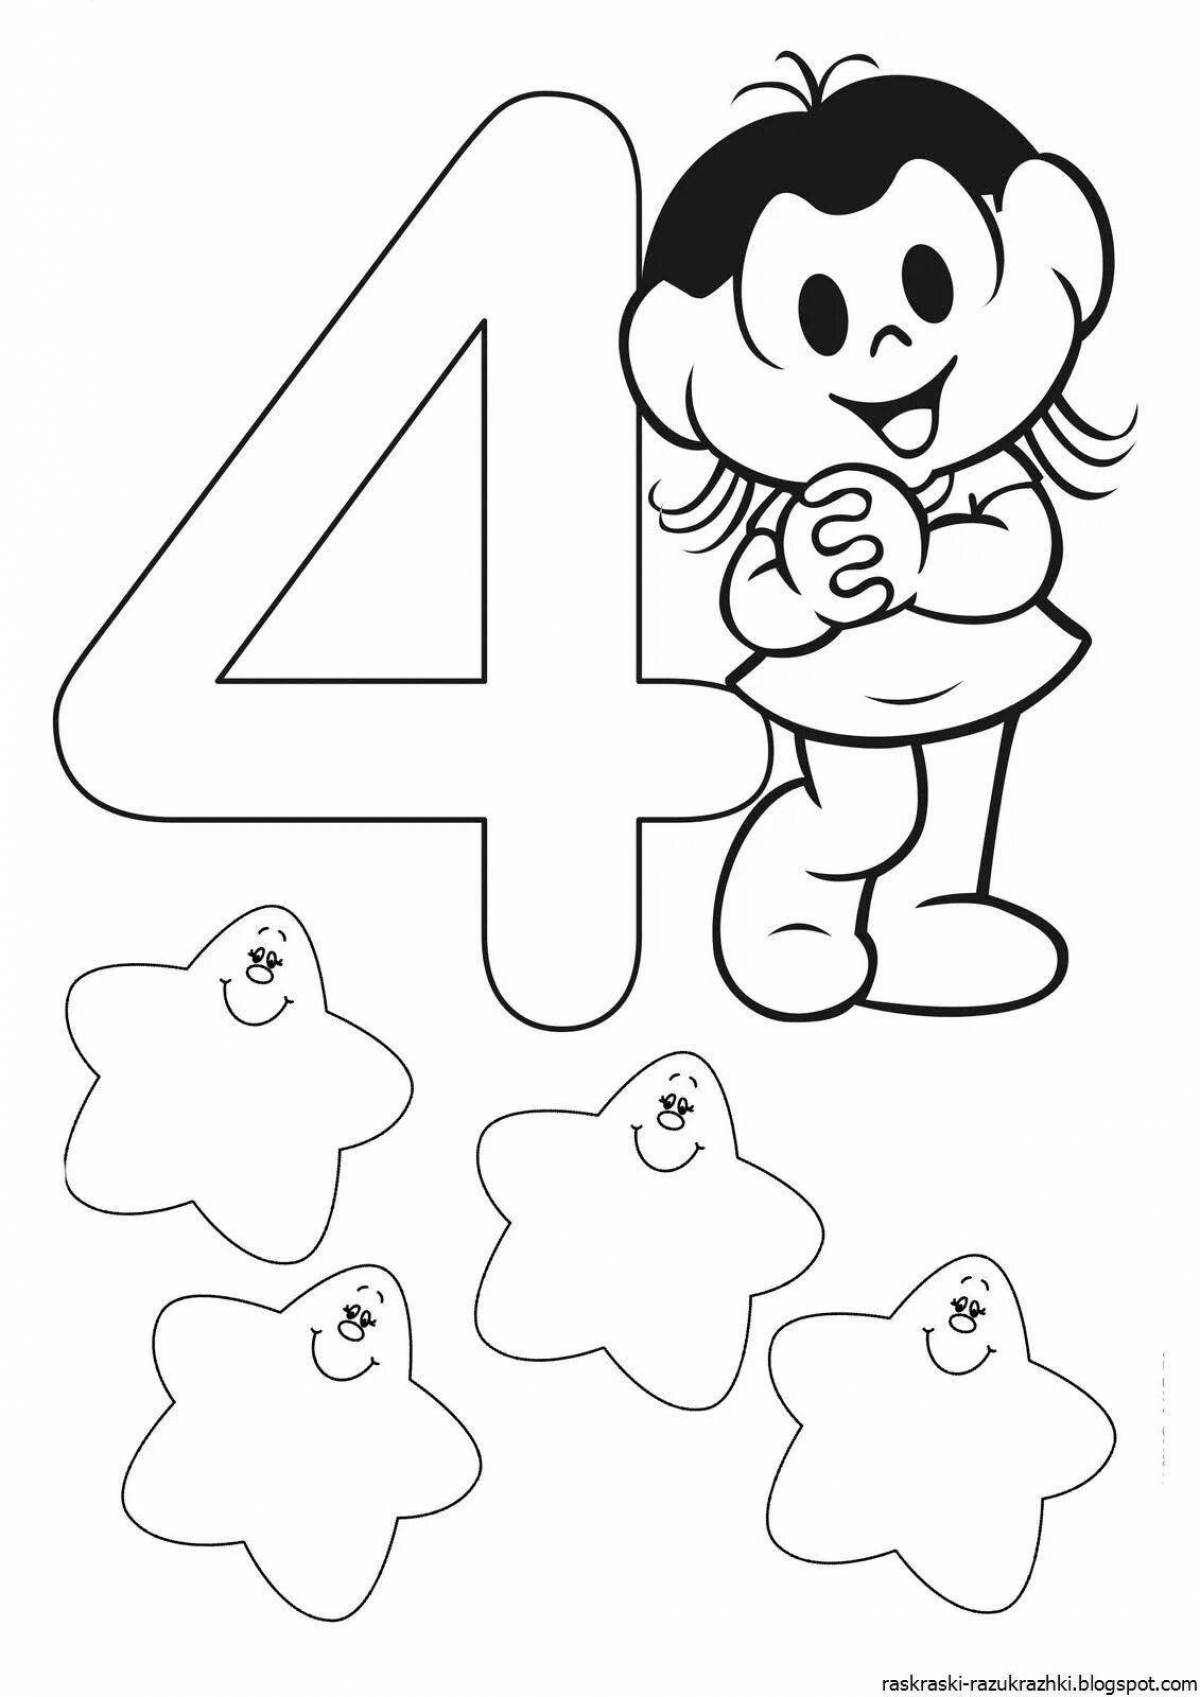 Number 4 for children #13